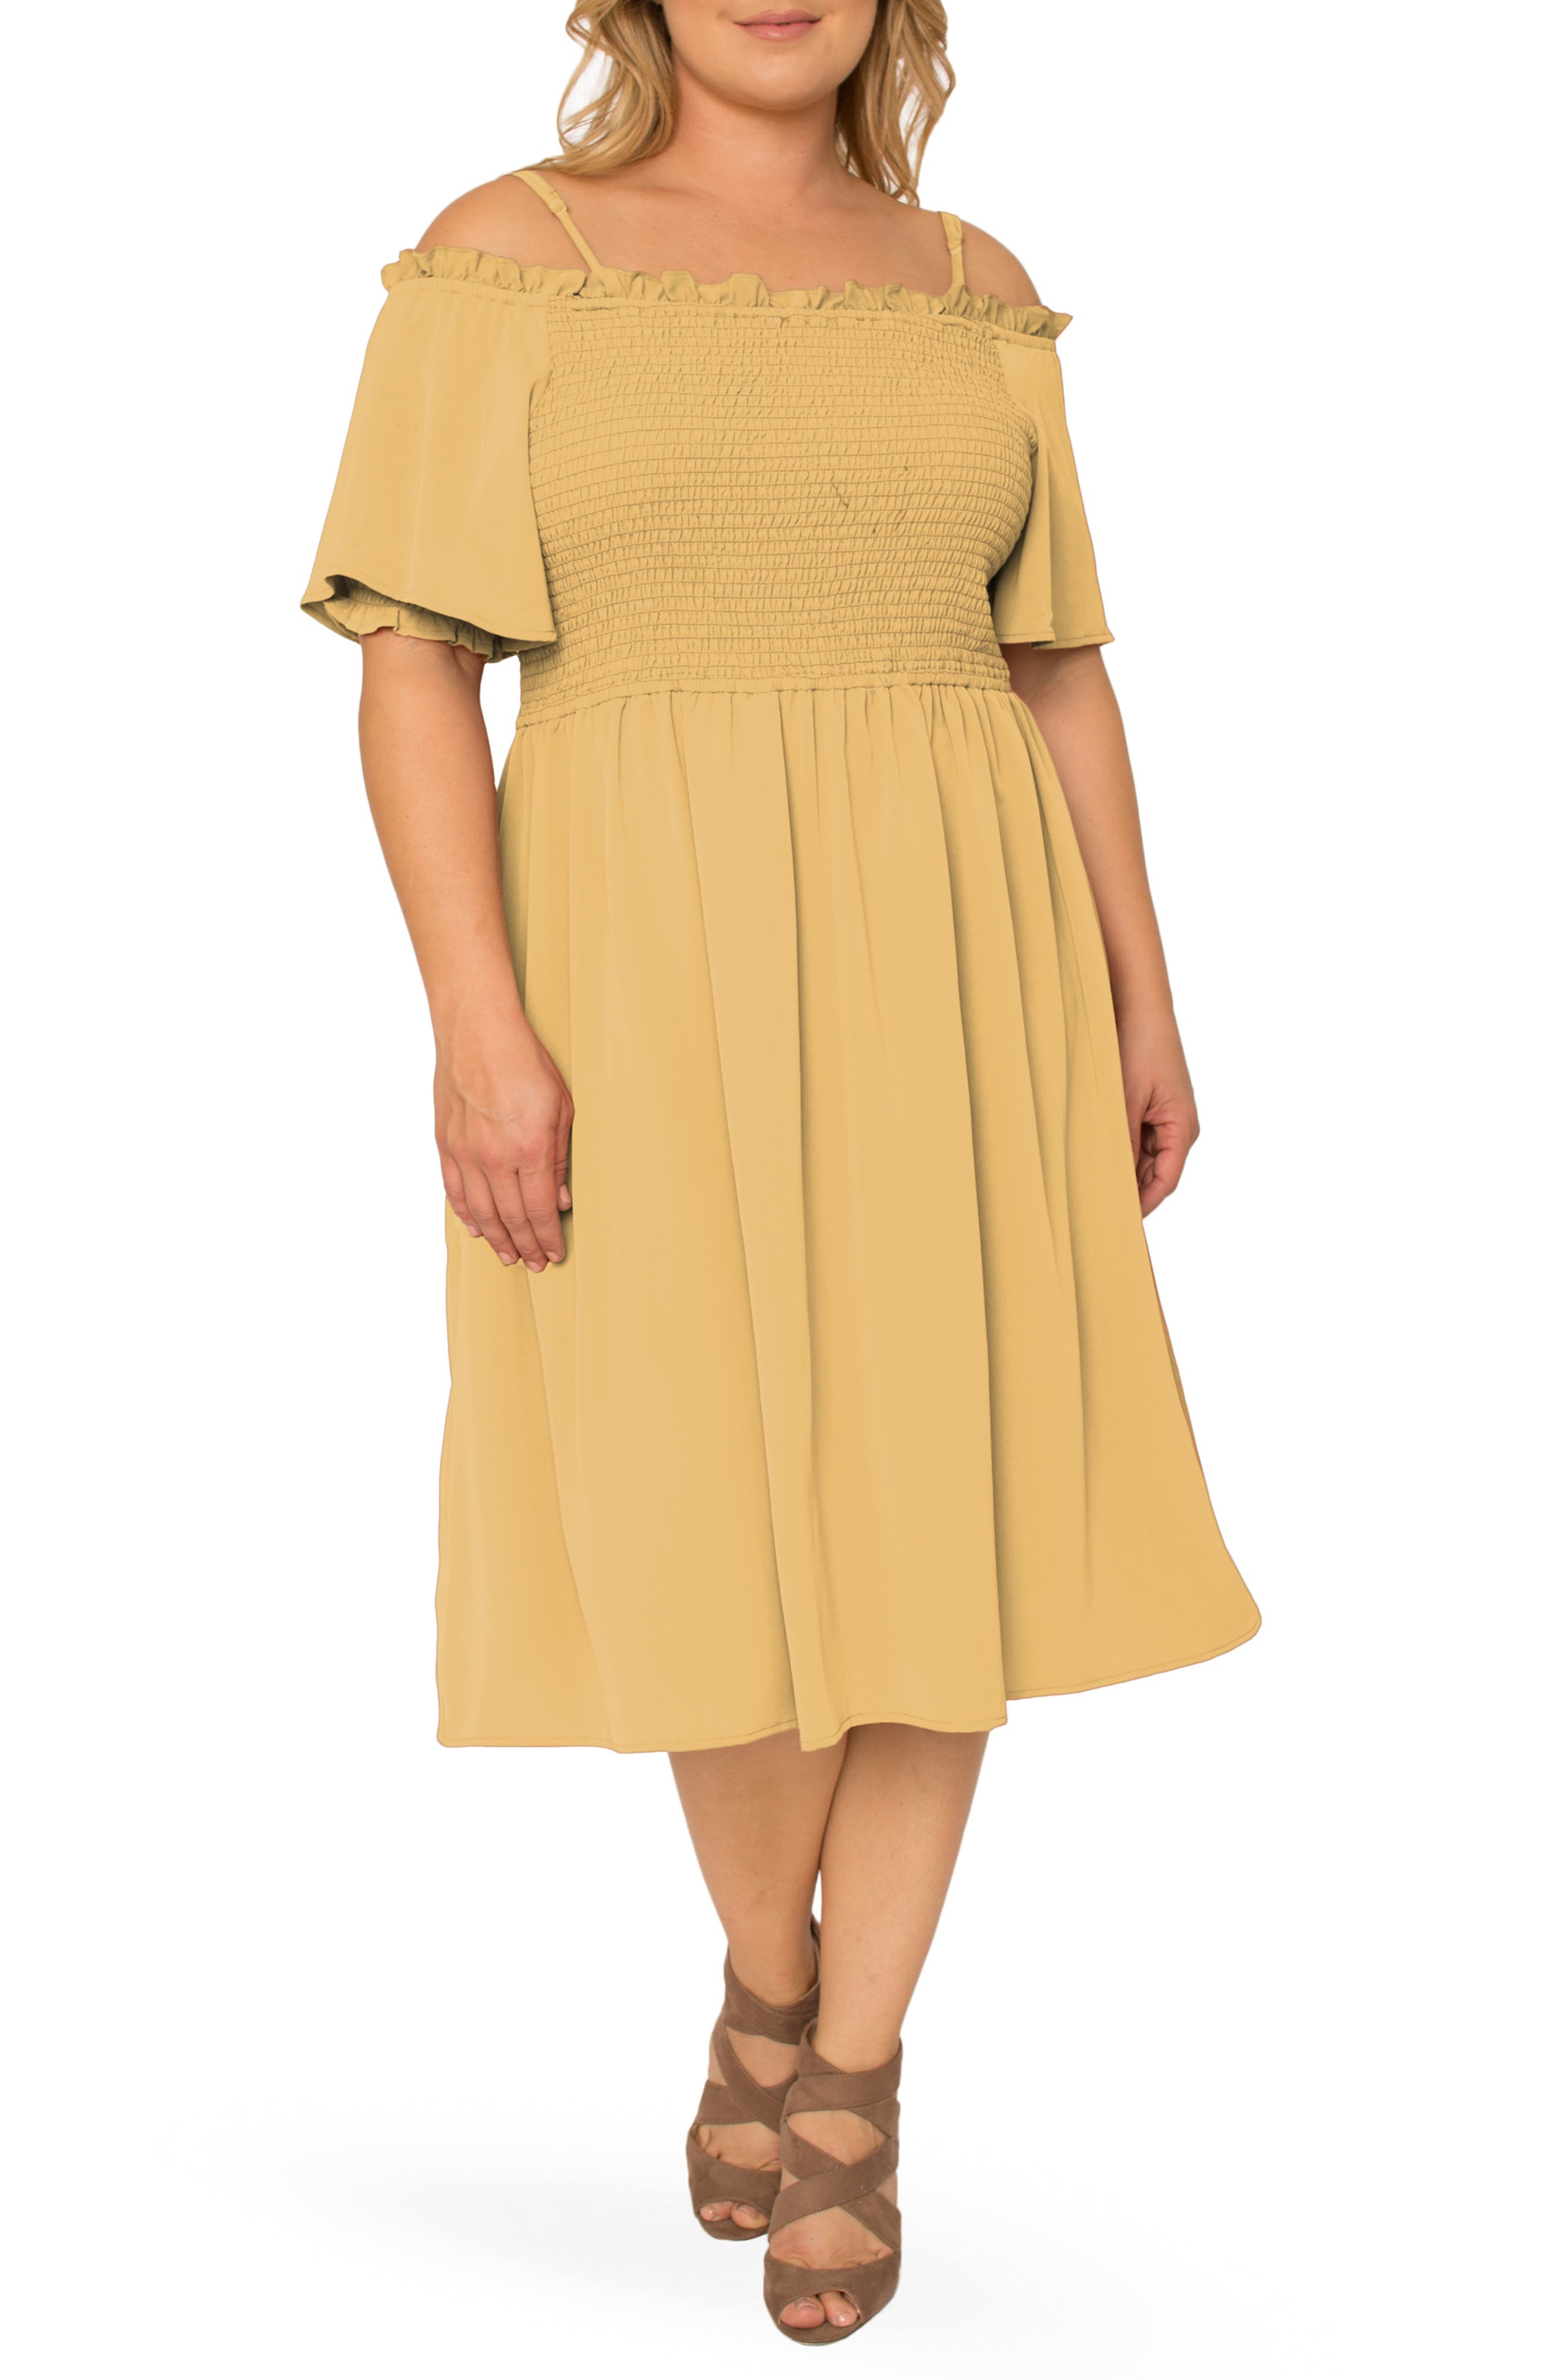 ZTTONE Women Casual Plus Size Solid Off Shoulder MId Dress Loose Party Dress Sundress 